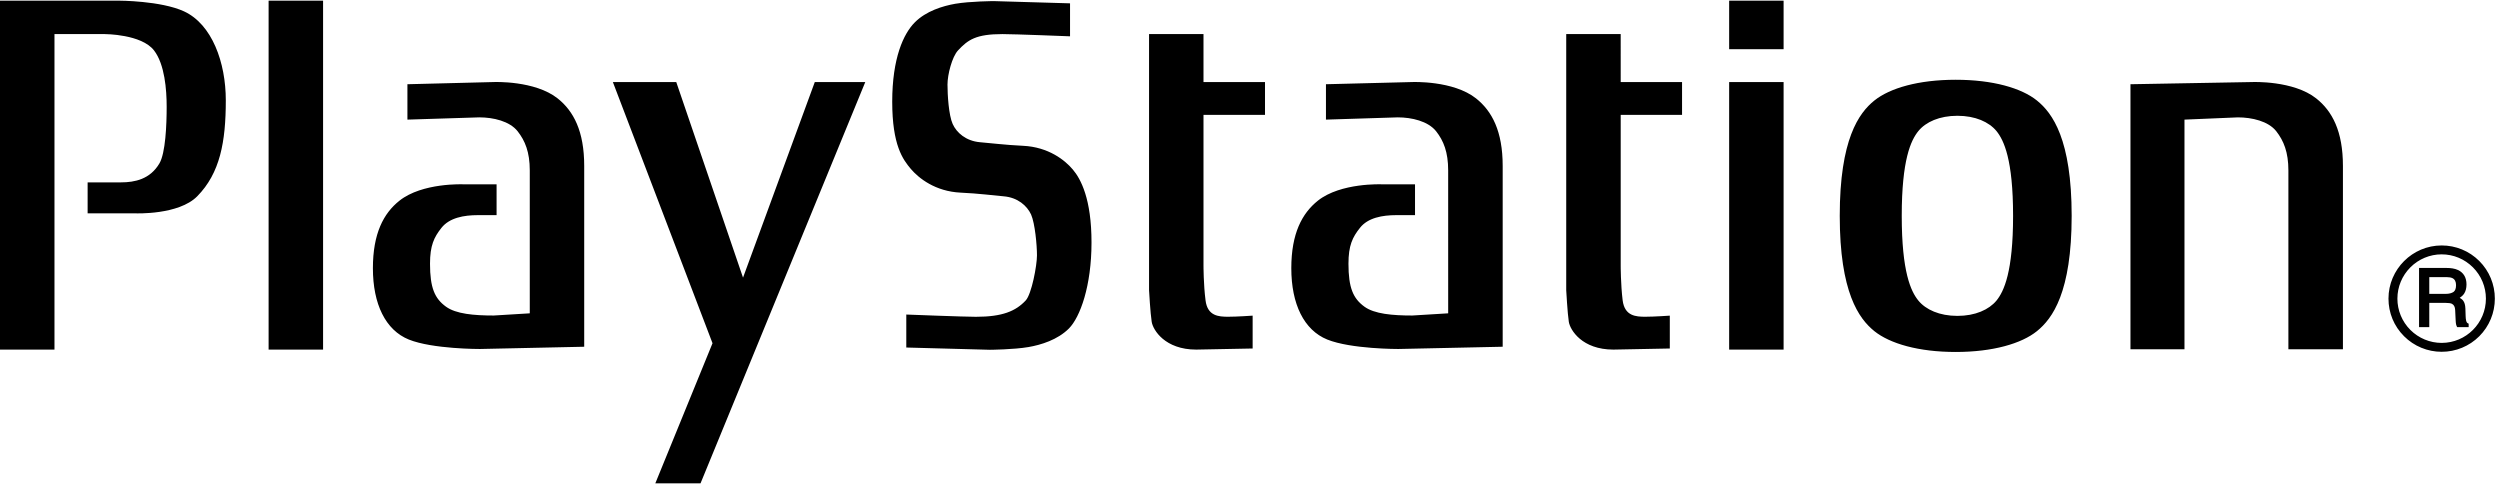 playstation矢量图logo0